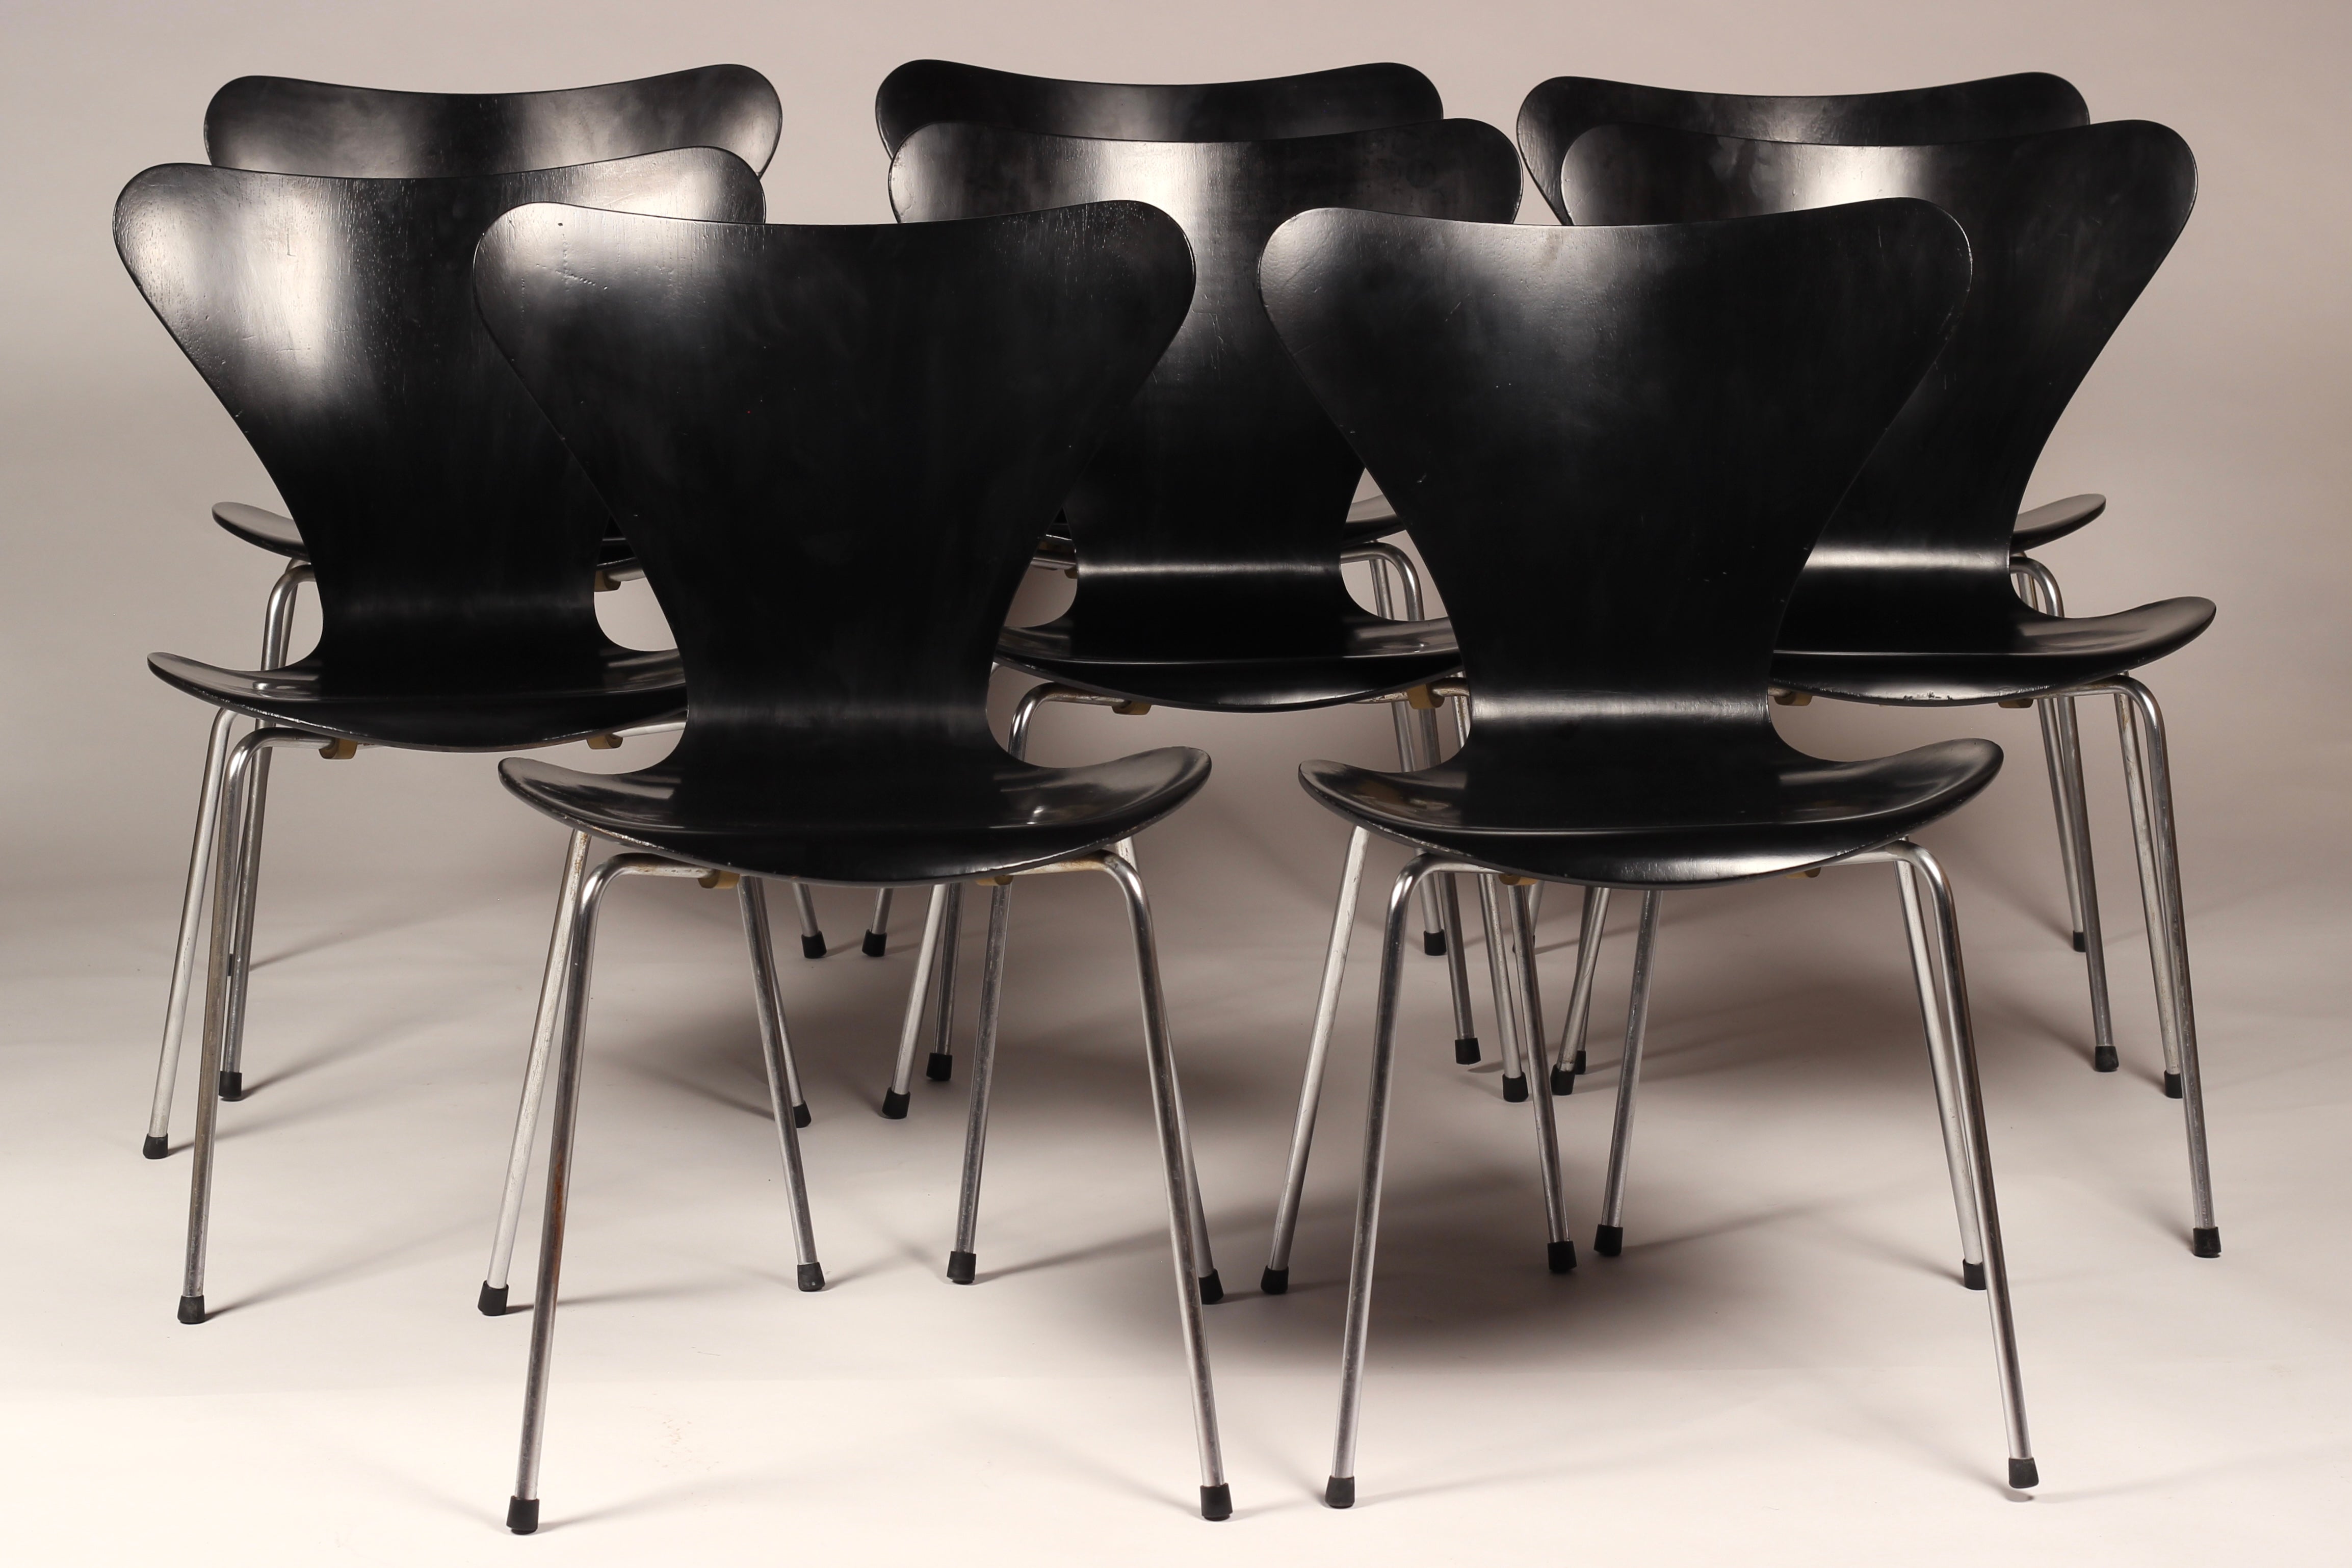 Arne Jacobsen Series 7 or 3107 Chairs by Fritz Hansen Mid Century Modern 1964